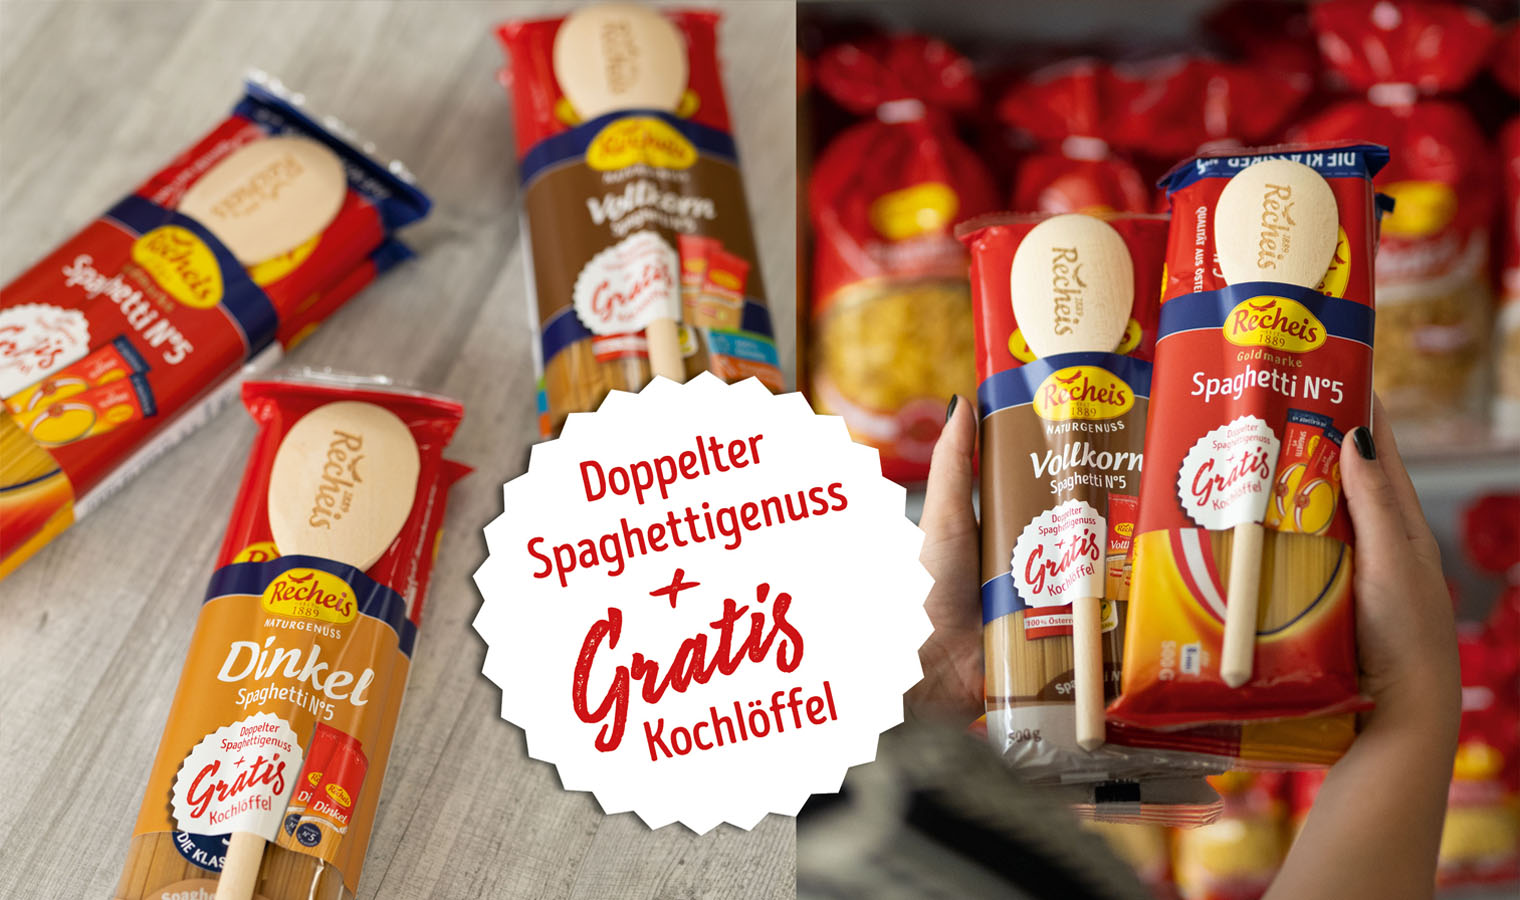 Recheis Spaghetti-Promotion im Doppelpack